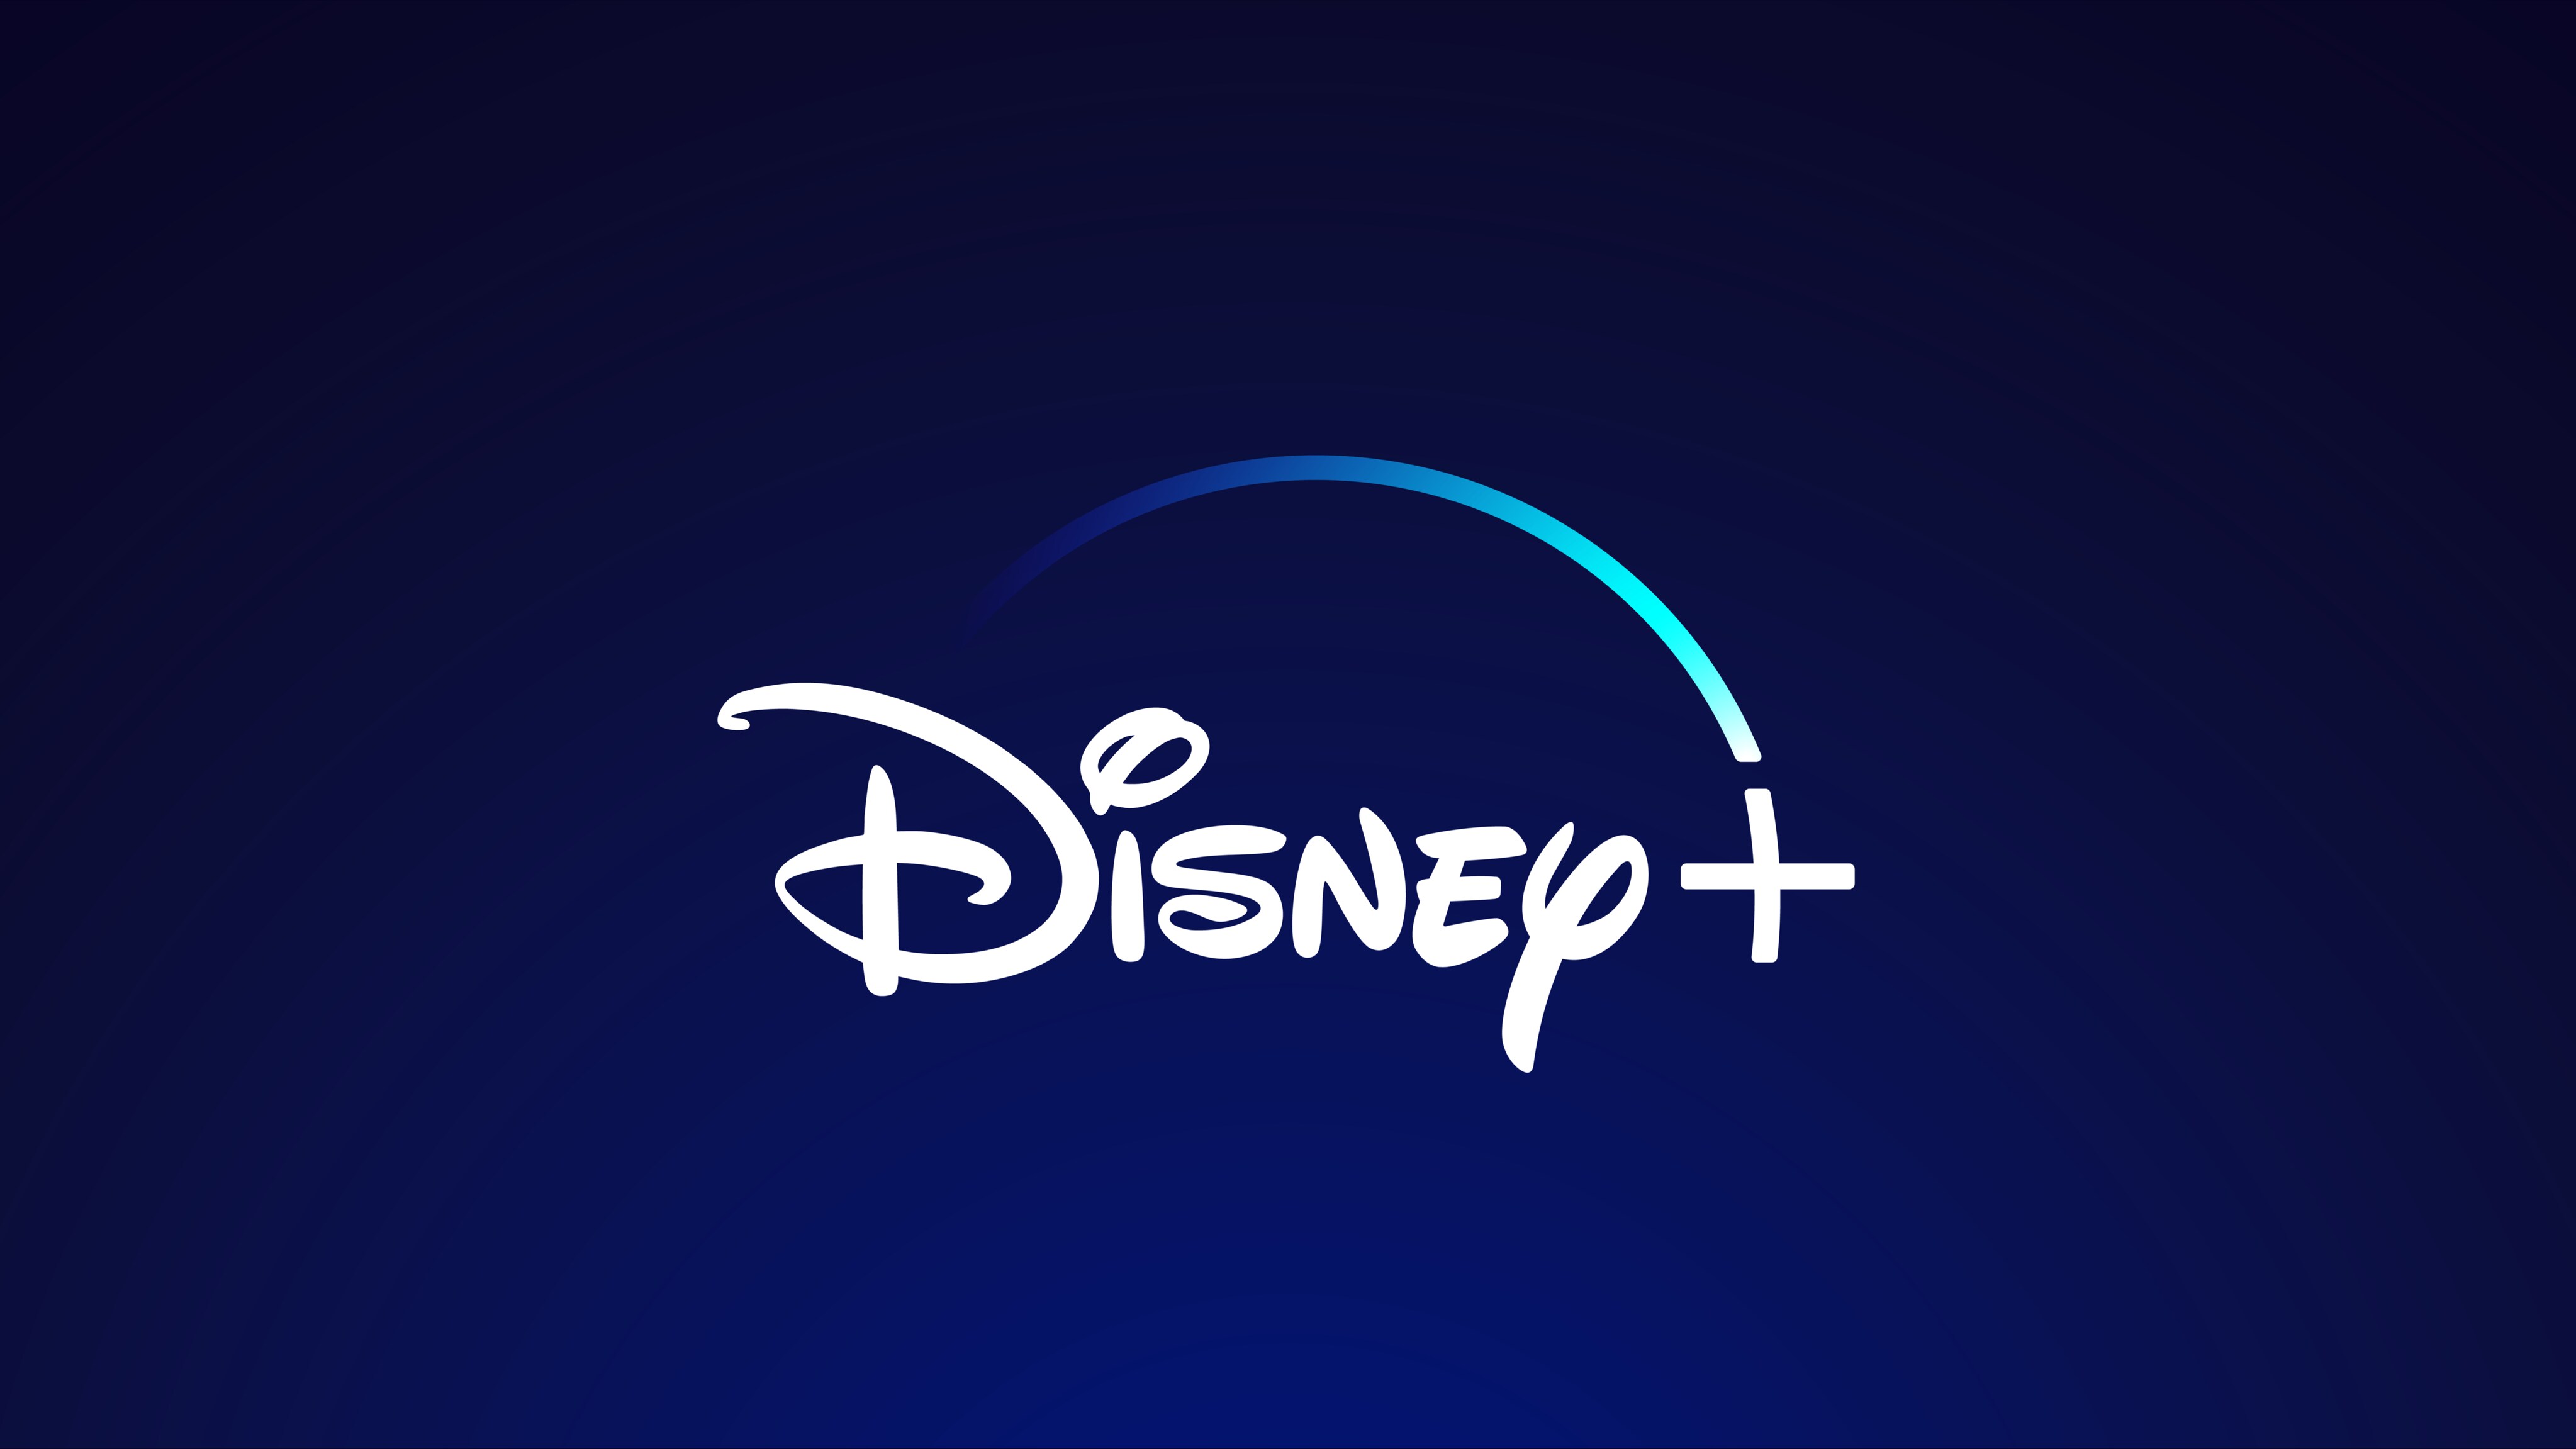 Next On Disney+: August 2020